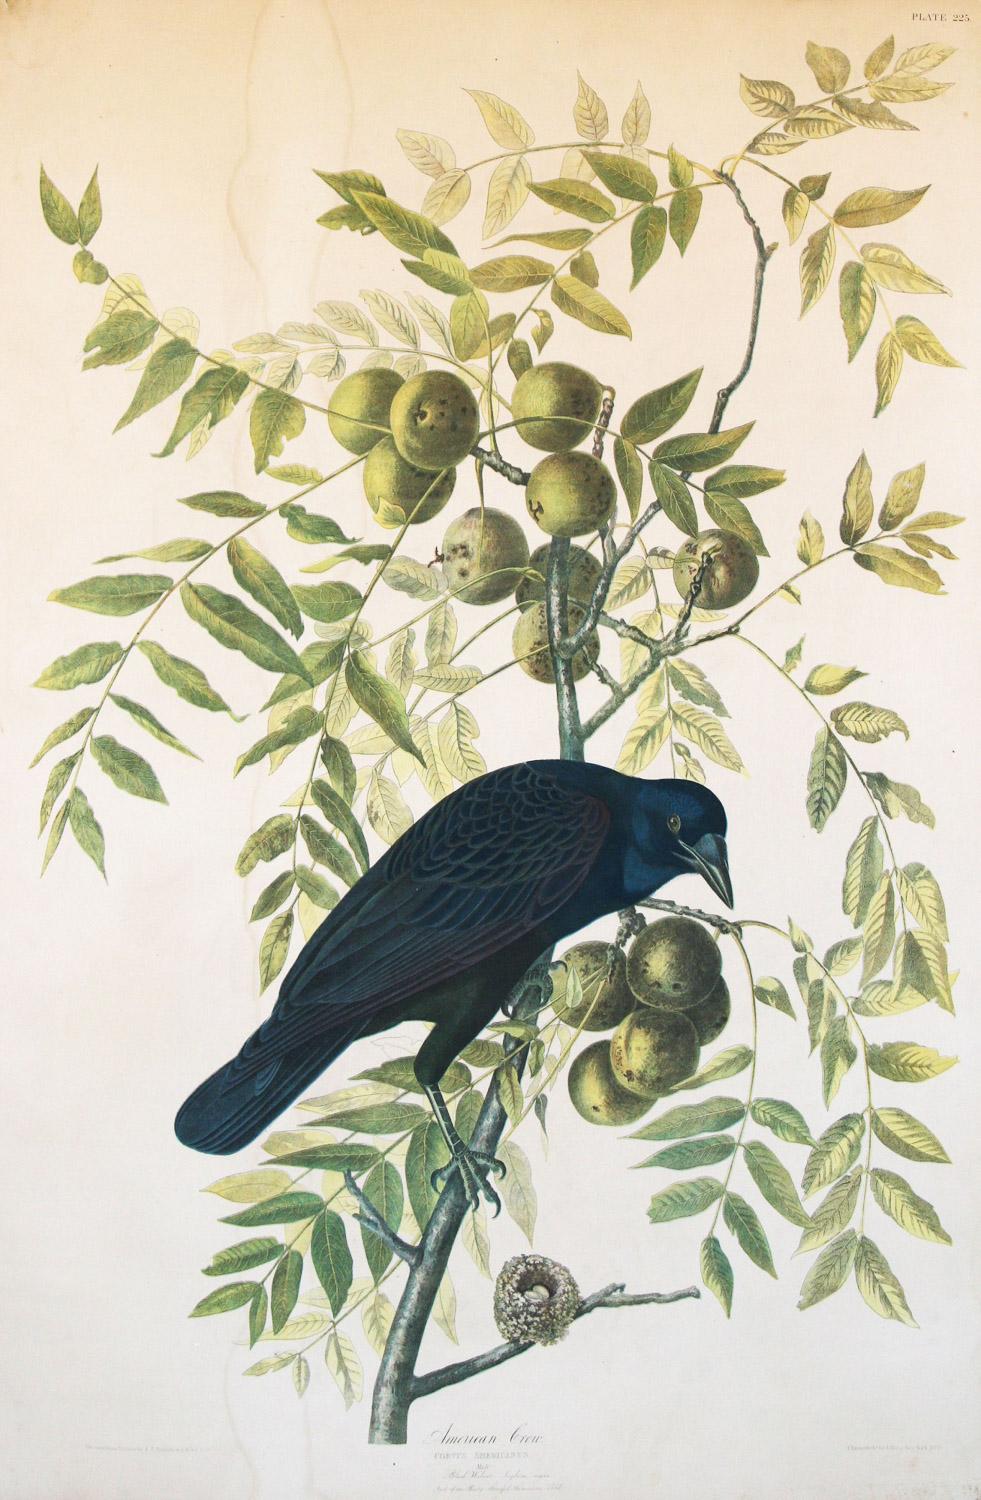 American Crow 1858 Chromolithograph by J.J. Audubon Plate, Julius Bien Edition